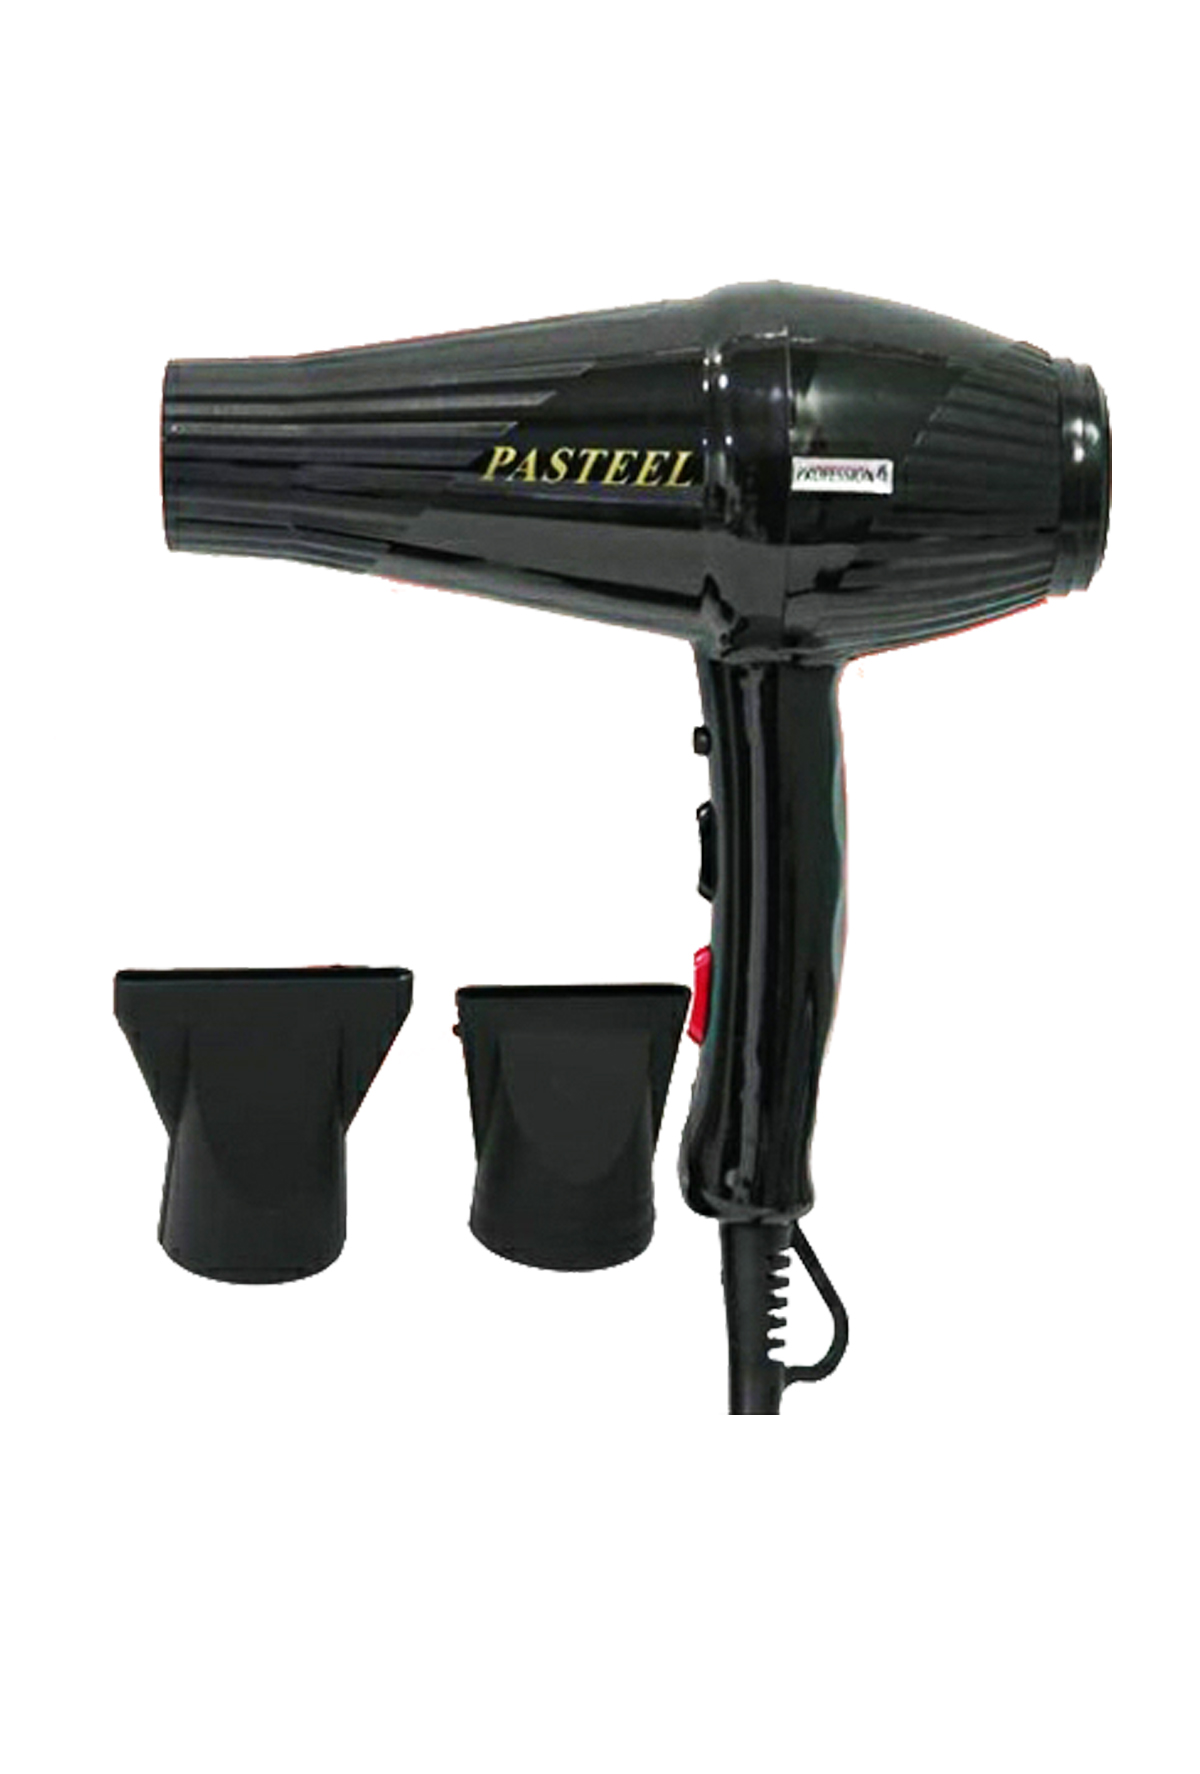 PASTEEL hair dryer